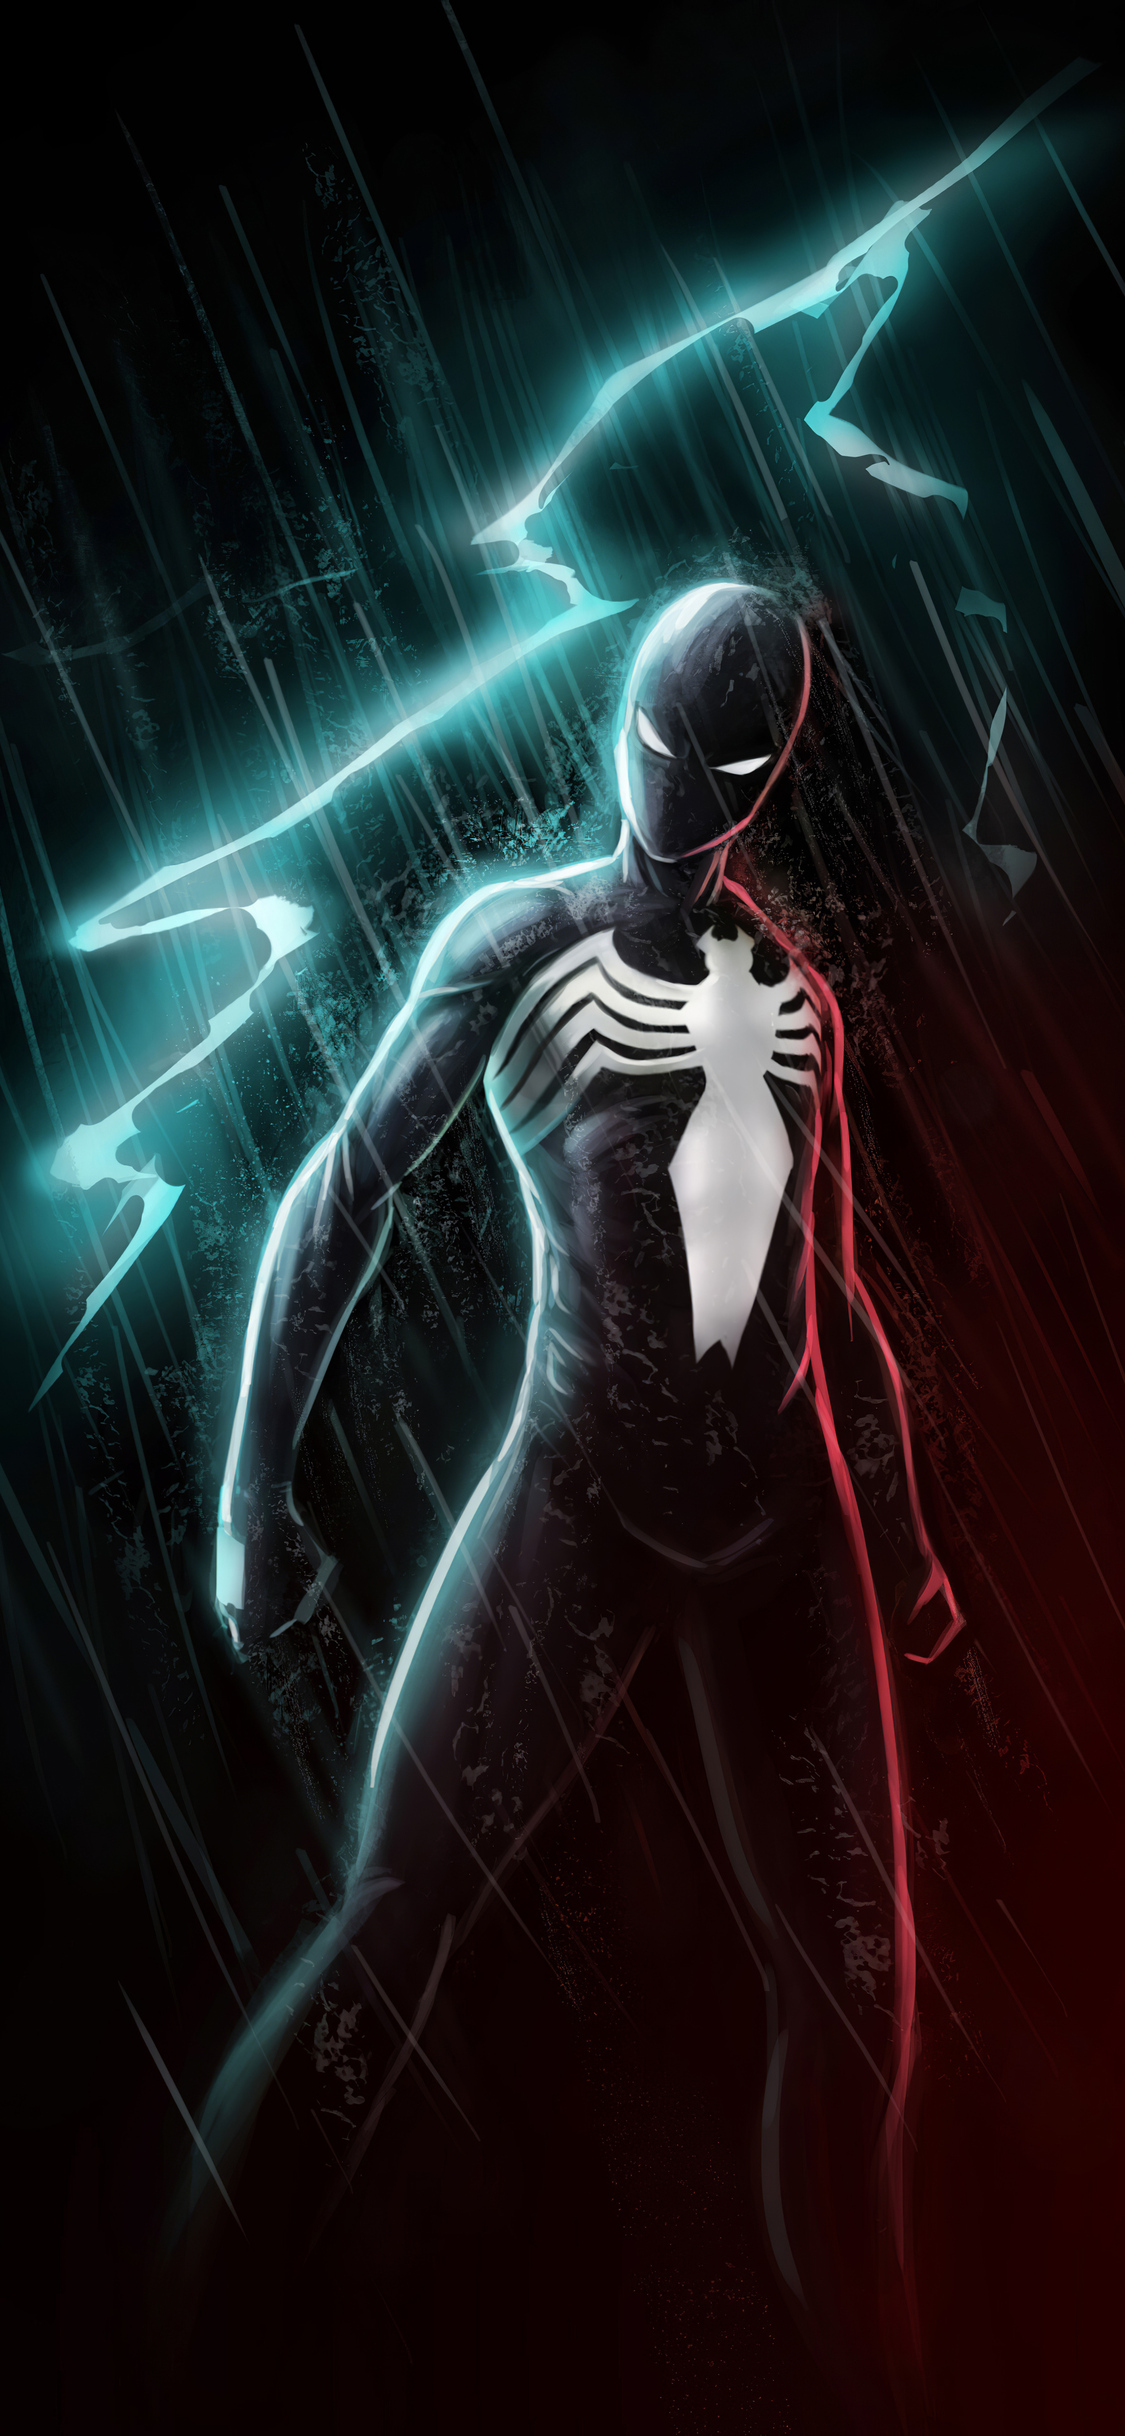 Black Spiderman (NOT Venom) - Drawception